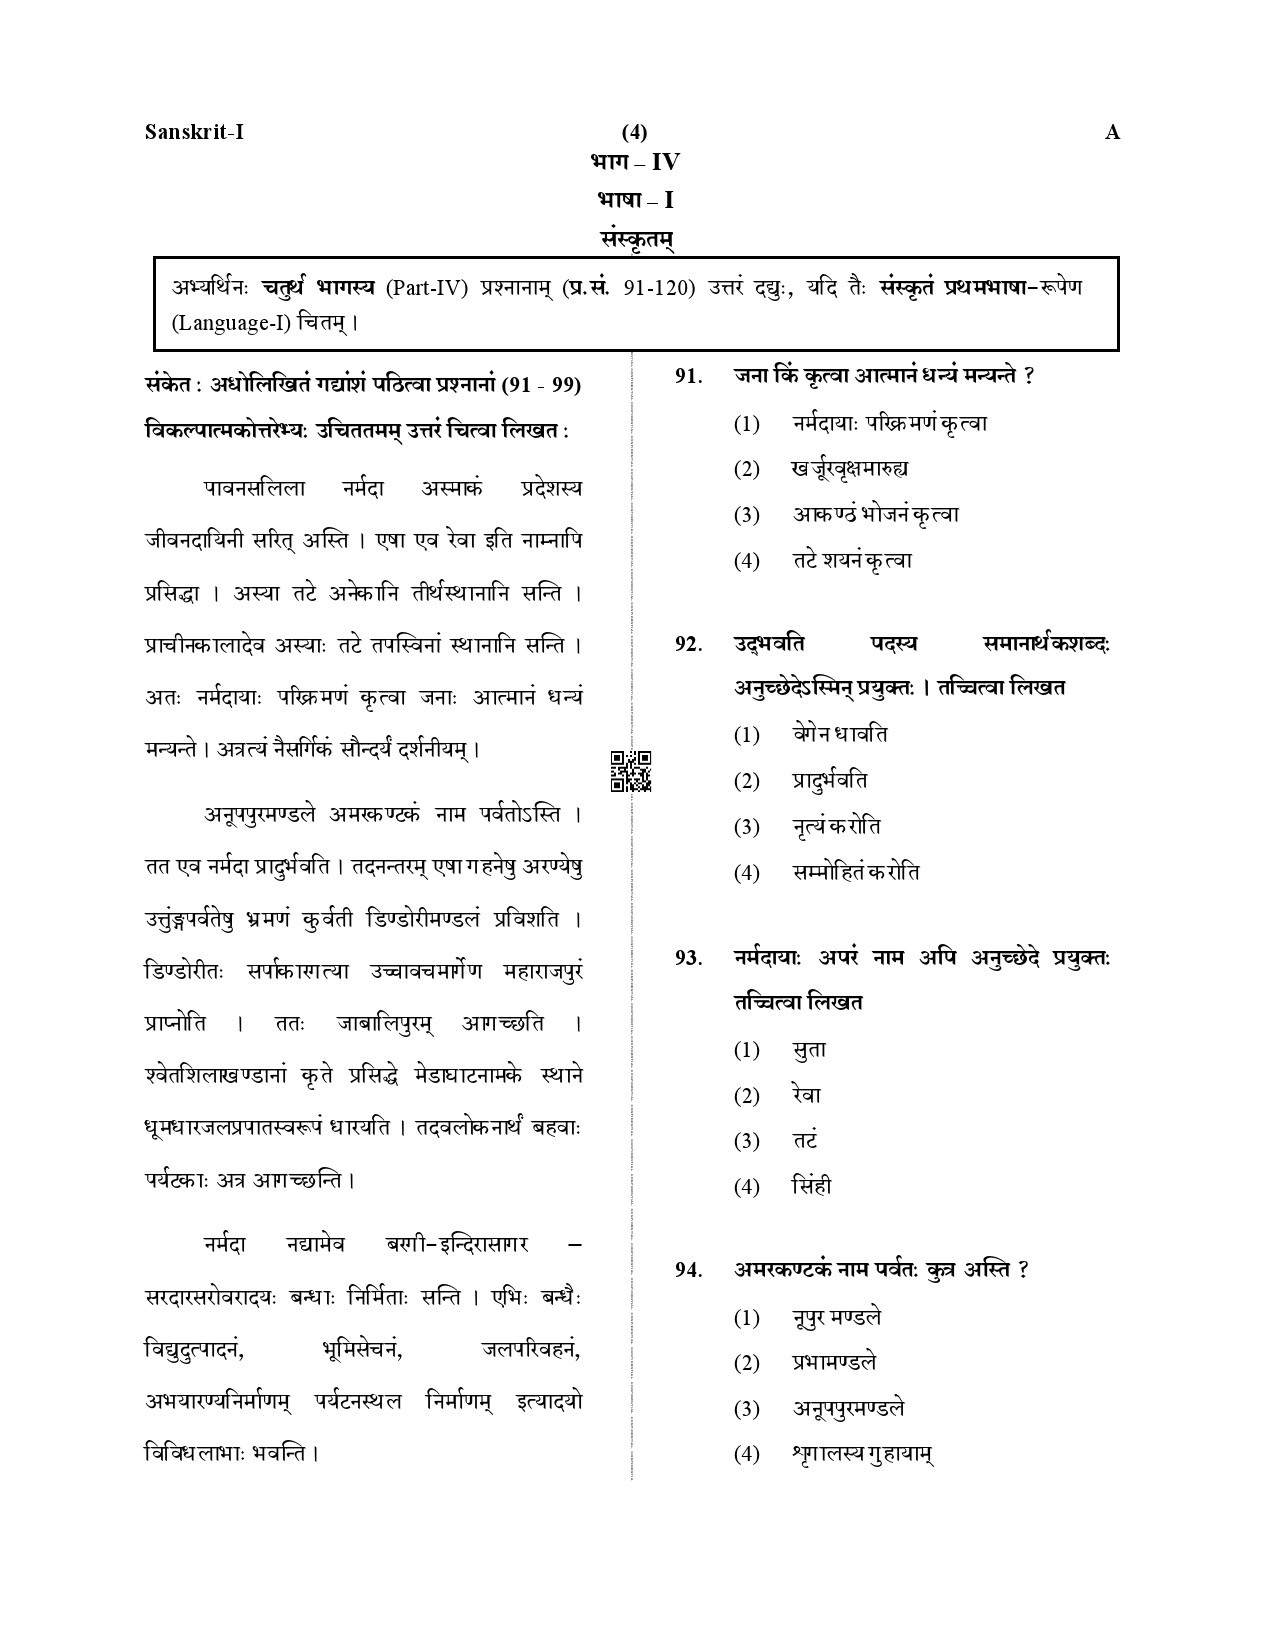 CTET December 2019 Paper 1 Part IV Language 1 Sanskrit 1